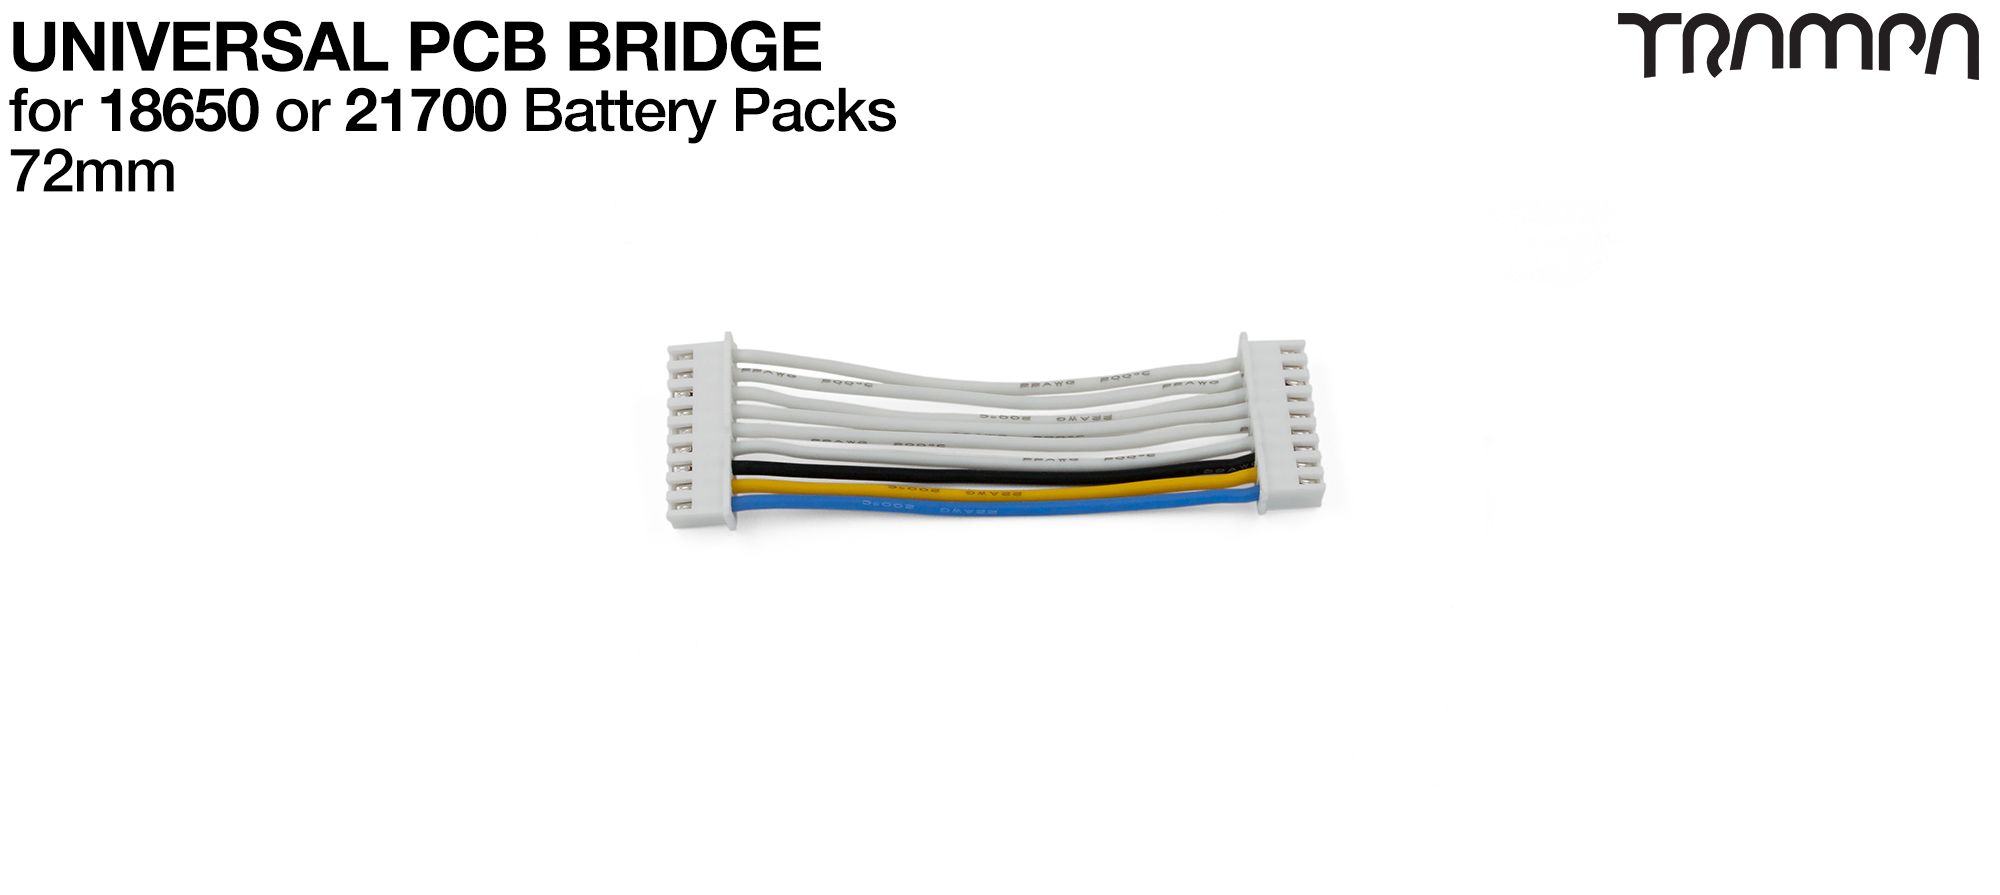 Universal PCB BRIDGE Cable for PCB GEN I Battery Packs